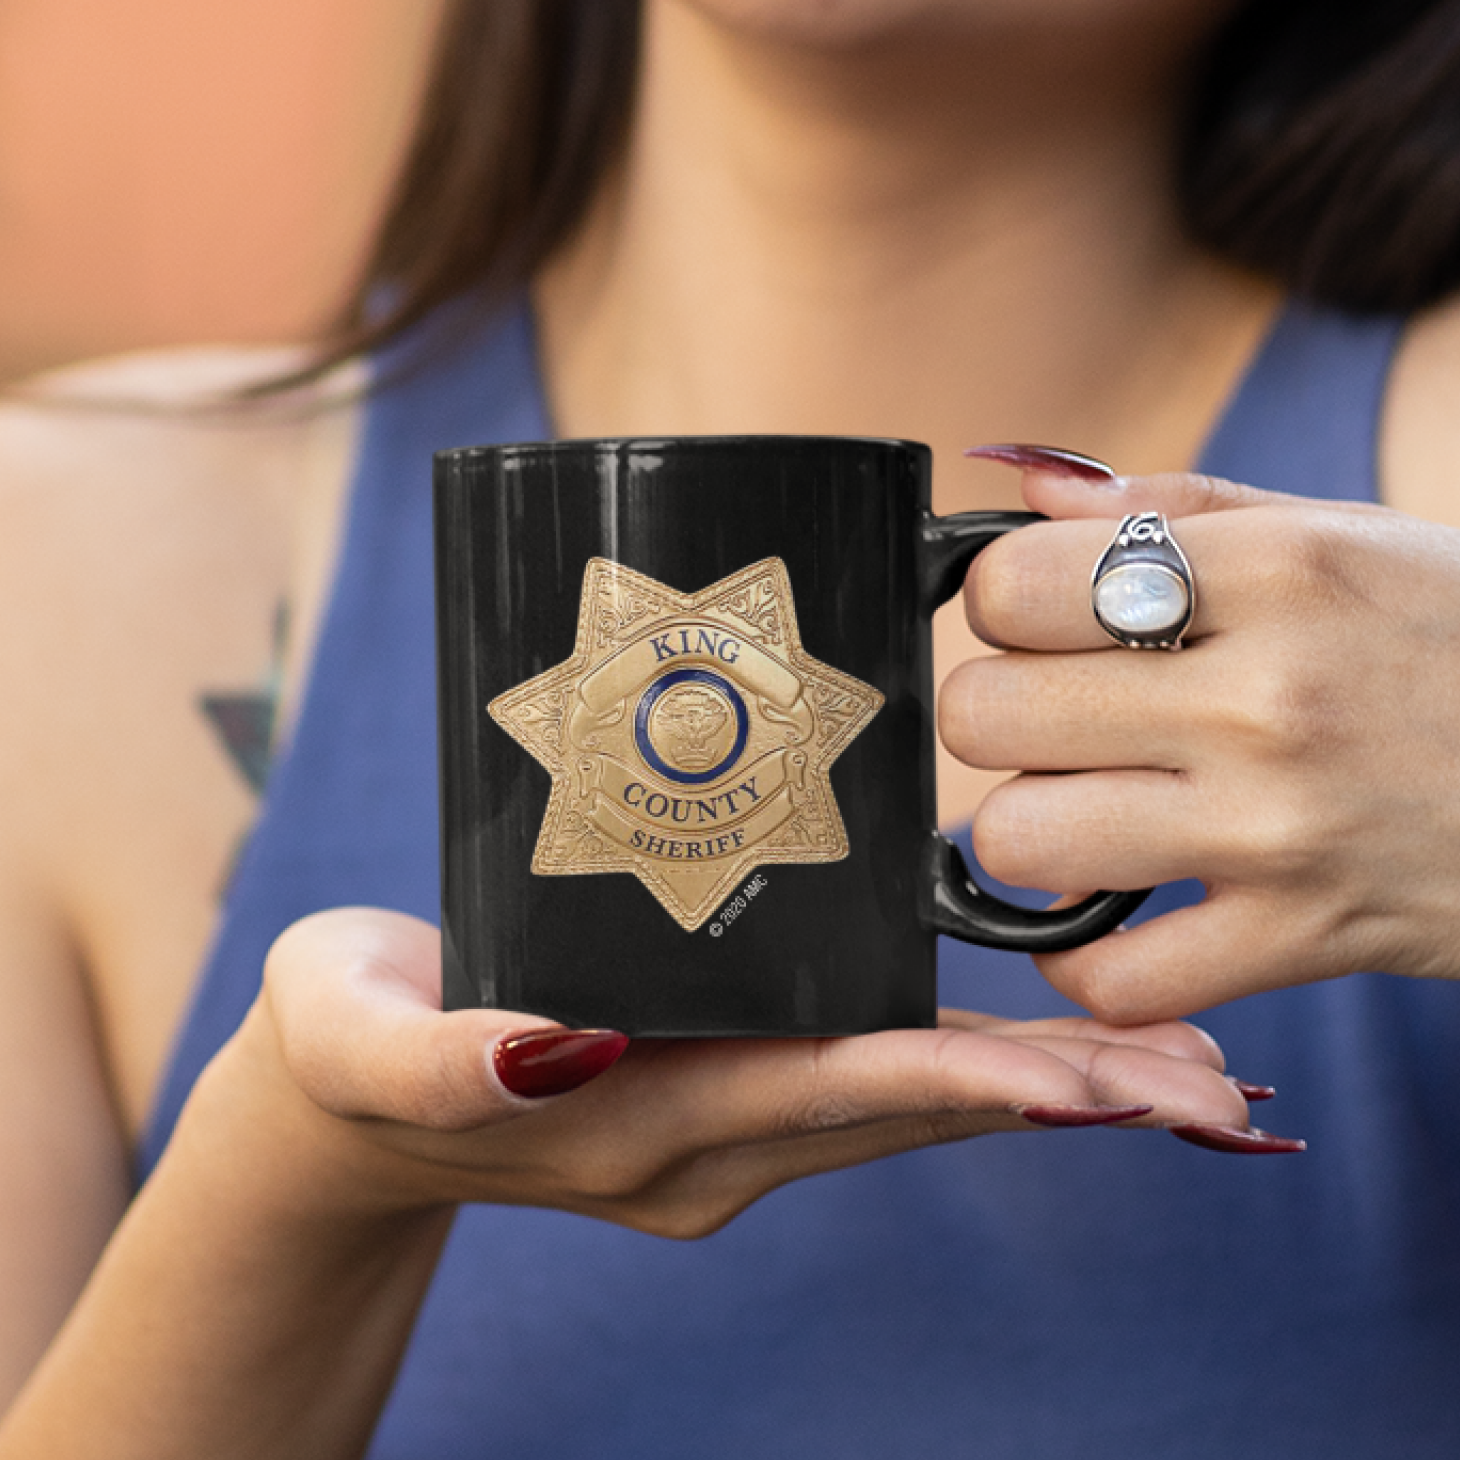 The Walking Dead Personalized Sheriff's Badge Black Mug